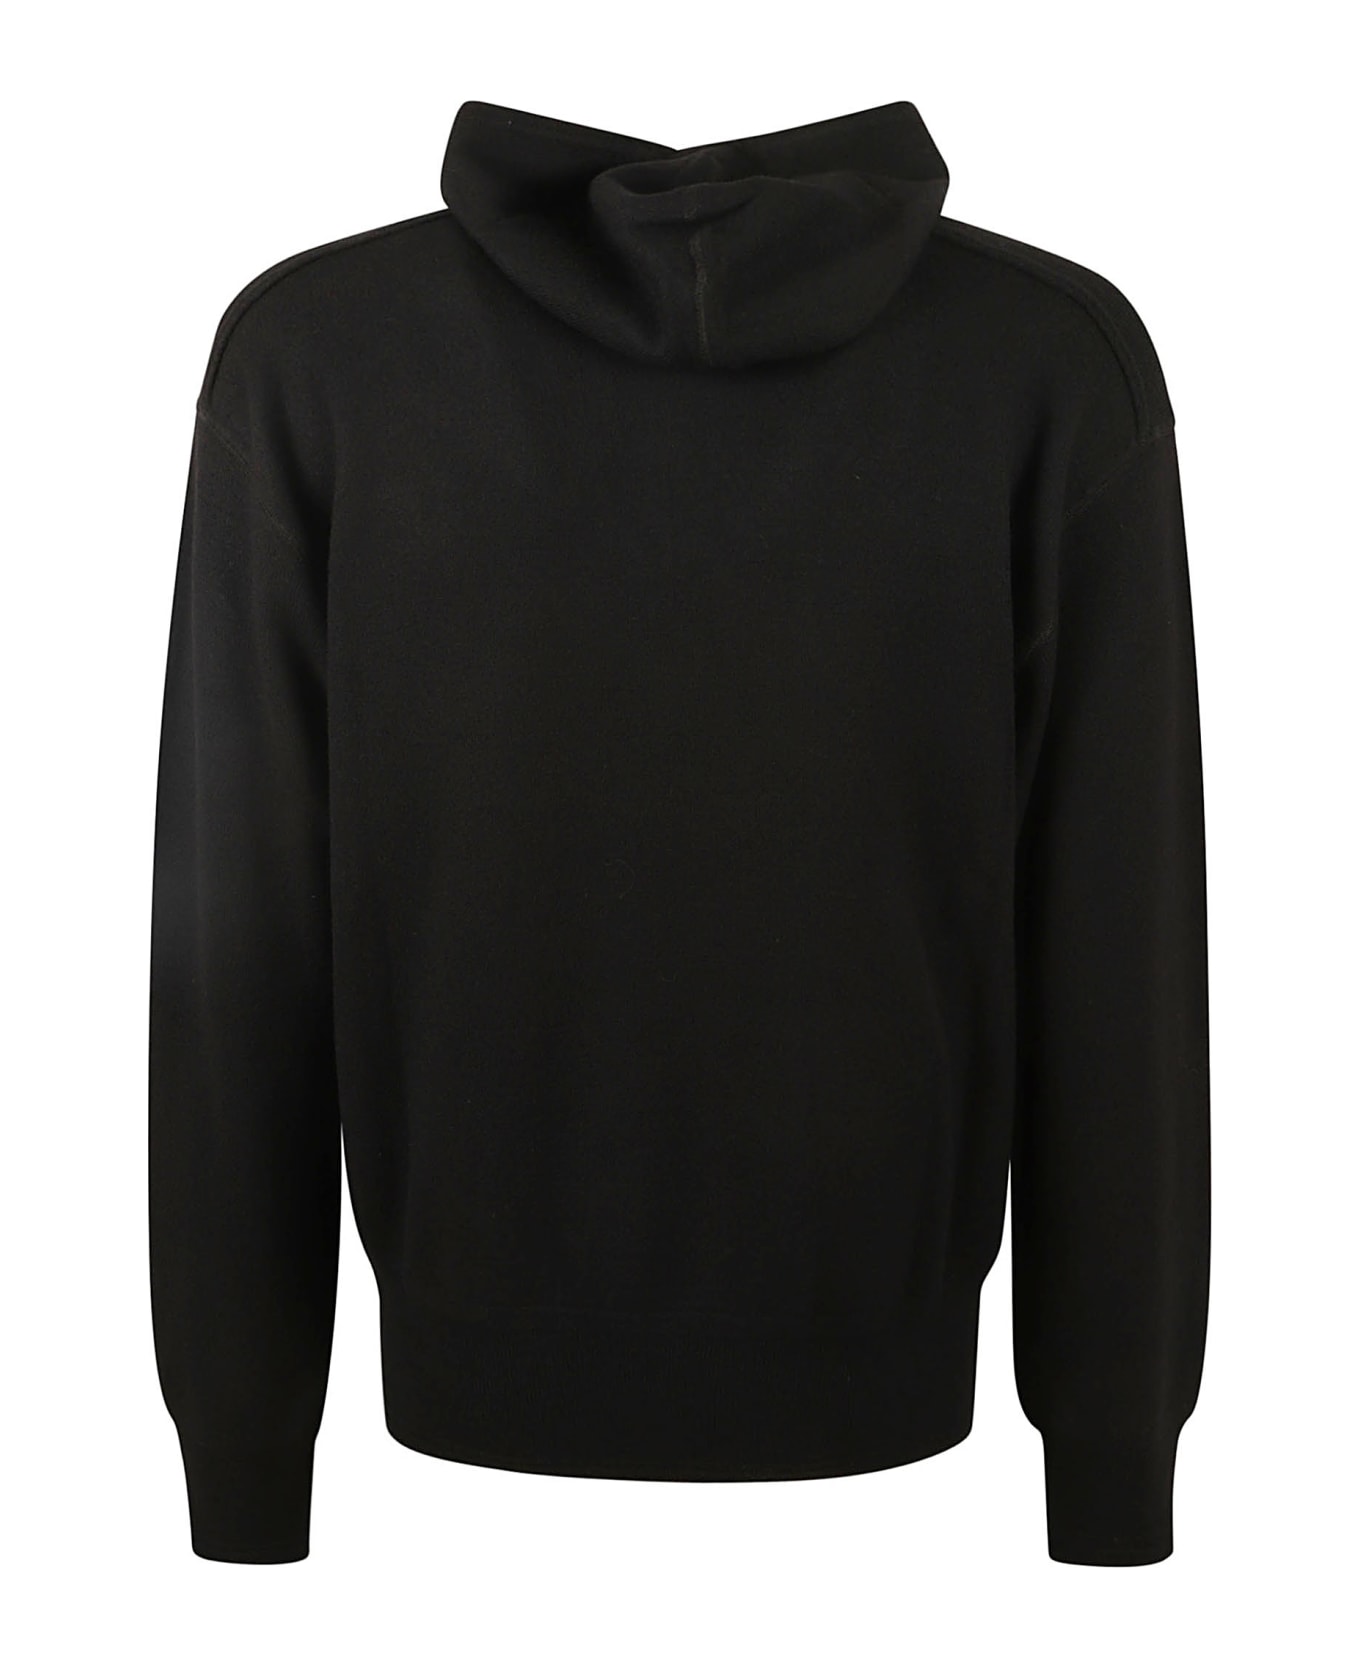 Burberry Rib Trim Hooded Sweater - Black